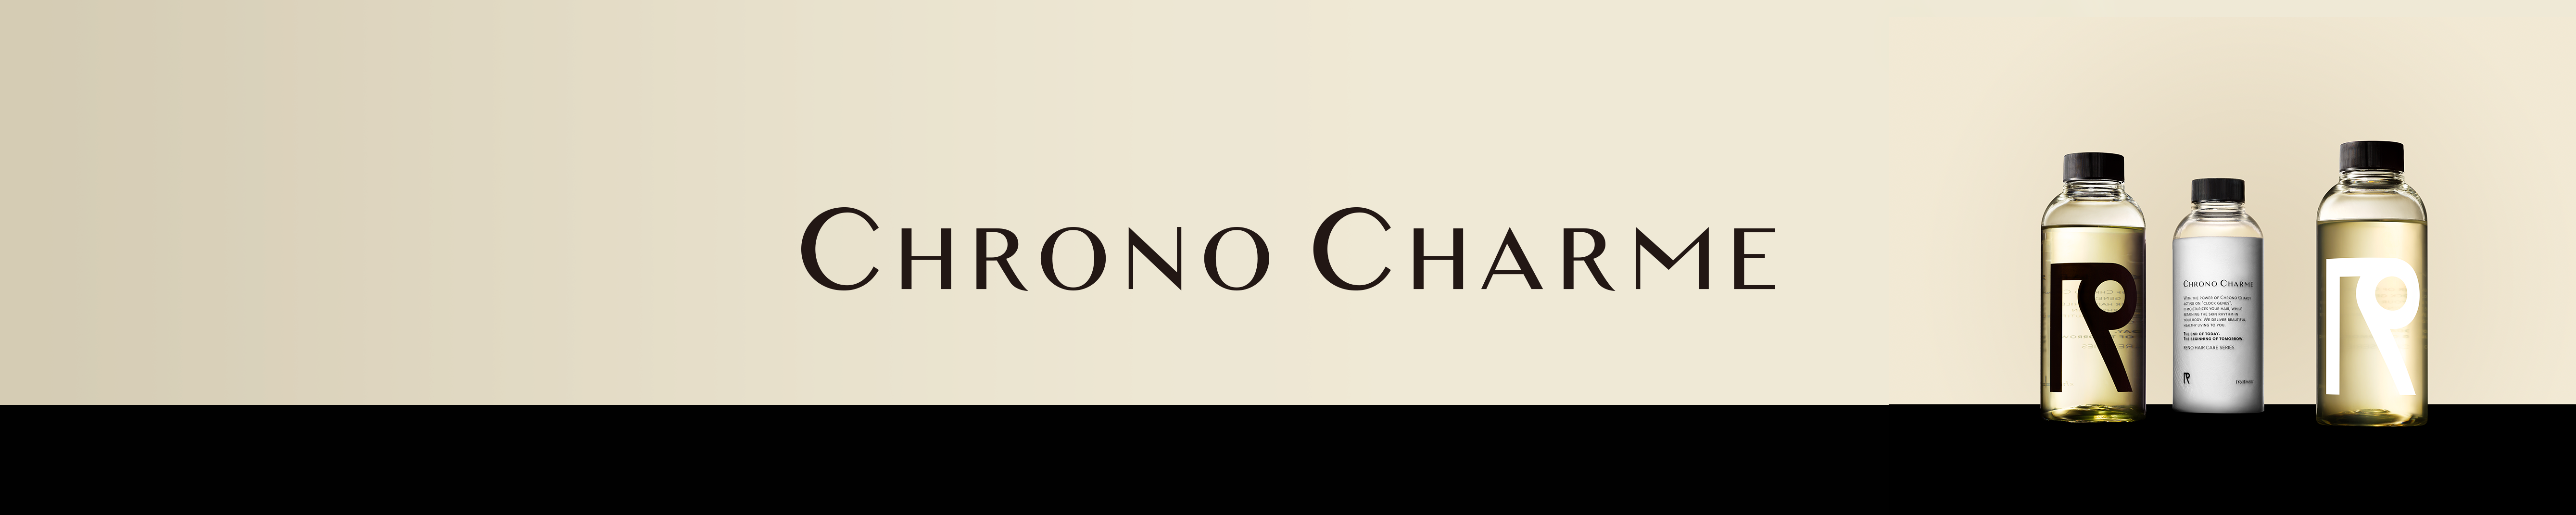 「CHRONO CHARME」が遂にBASEに直営店をオープン